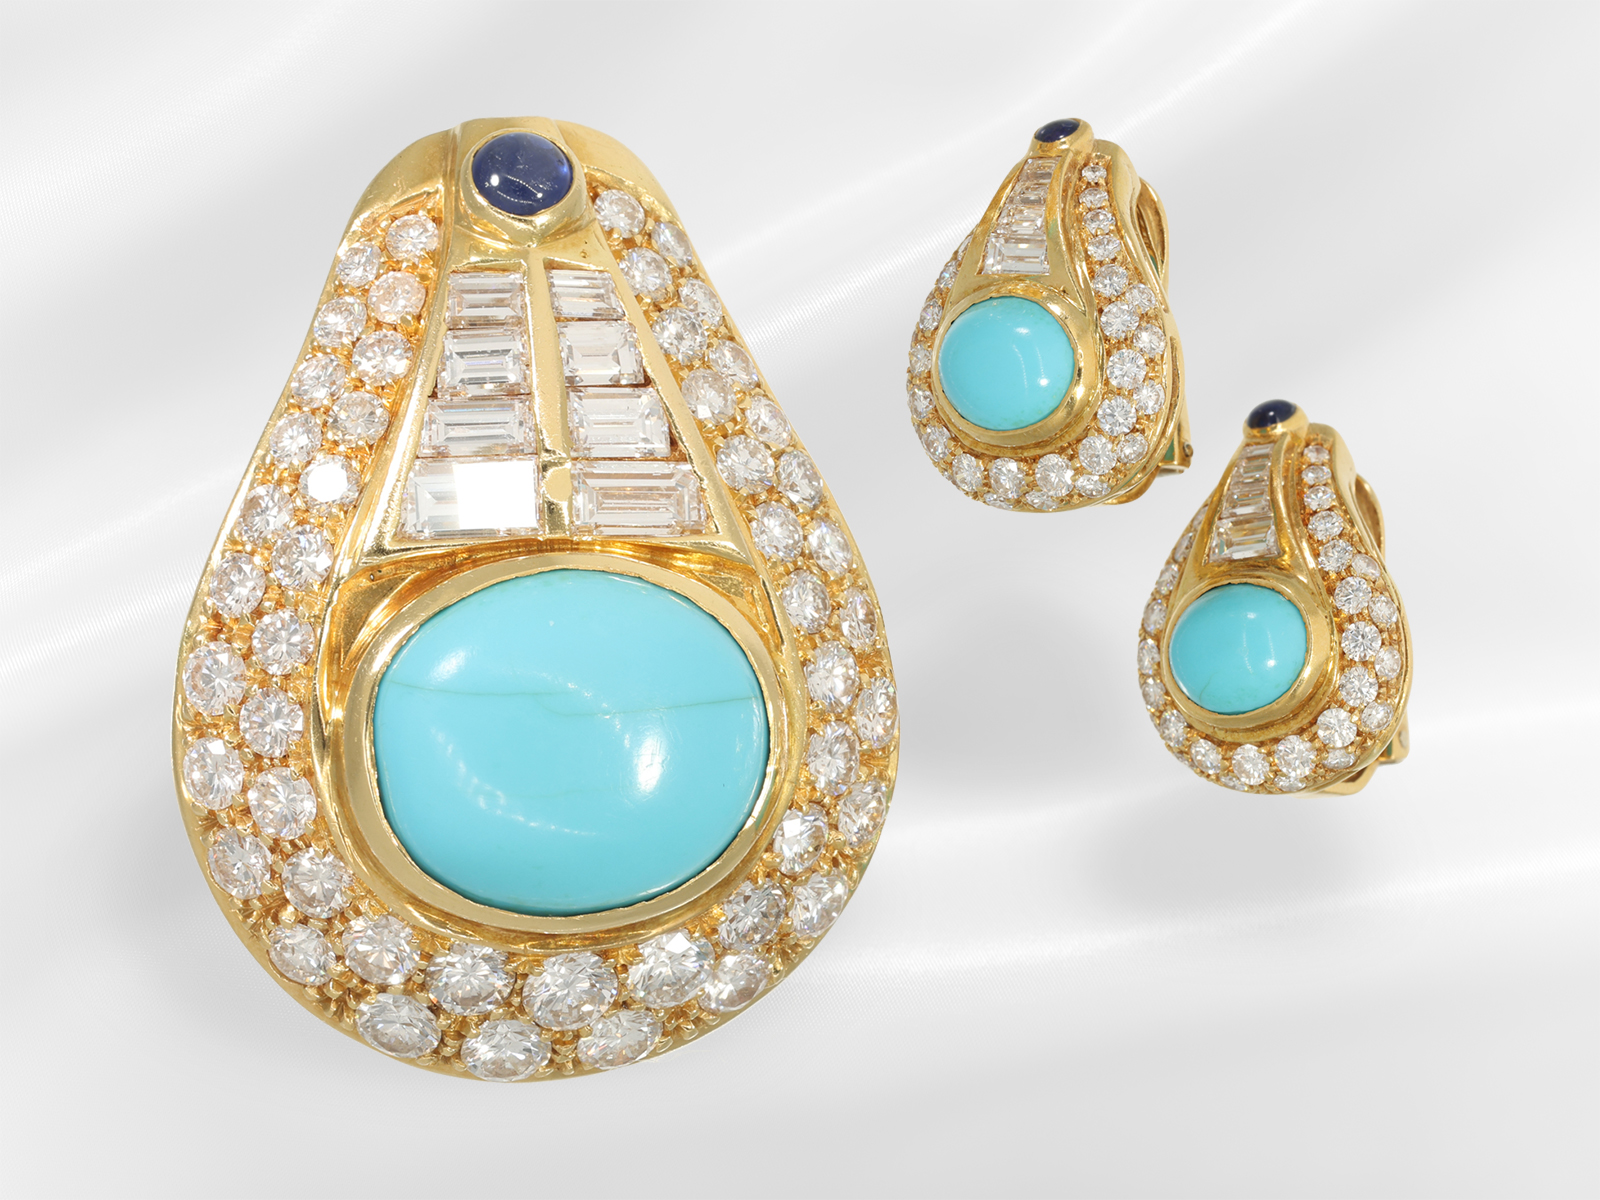 Extremely decorative turquoise/sapphire jewellery set with abundant brilliant-cut diamonds/diamonds,